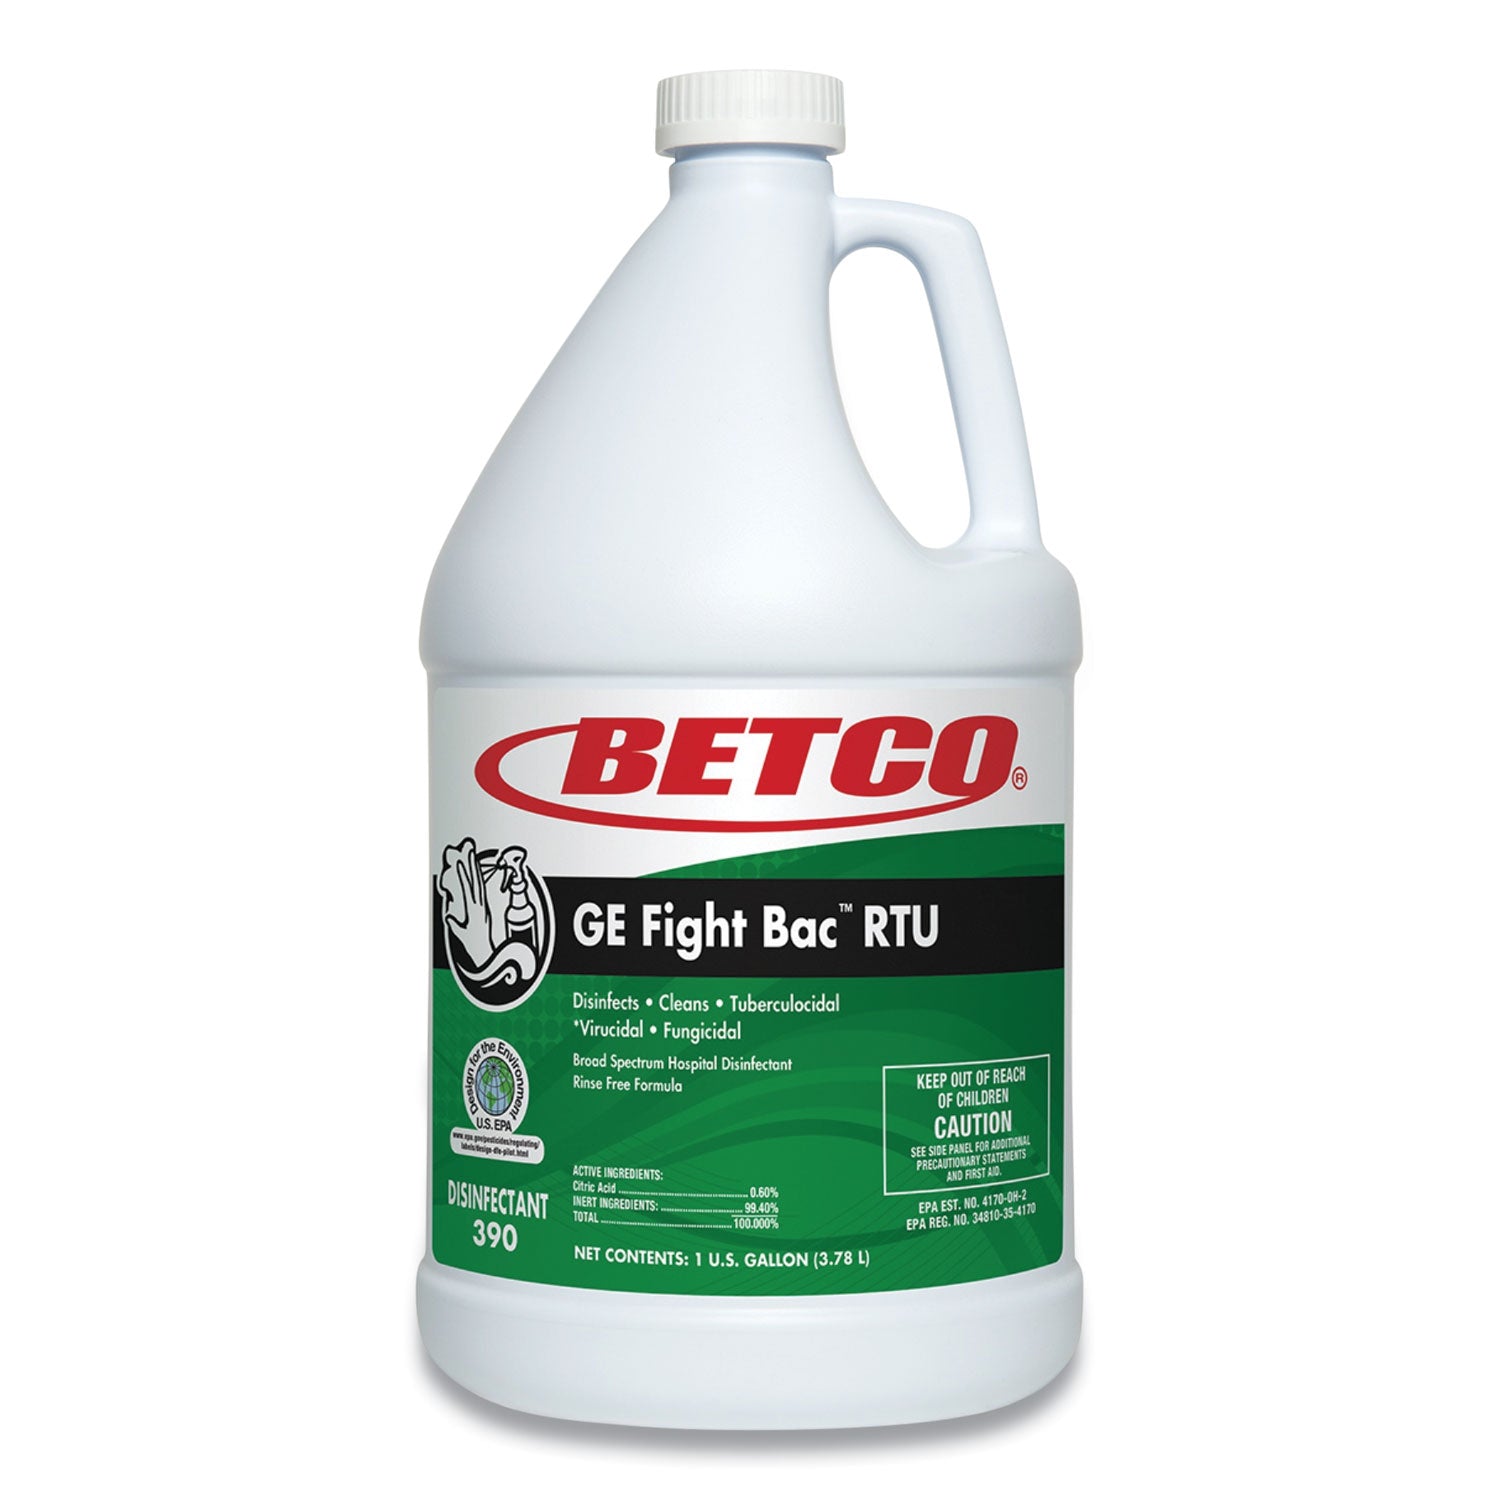 ge-fight-bac-rtu-disinfectant-fresh-scent-1-gal-bottle-4-carton_bet3900400 - 1